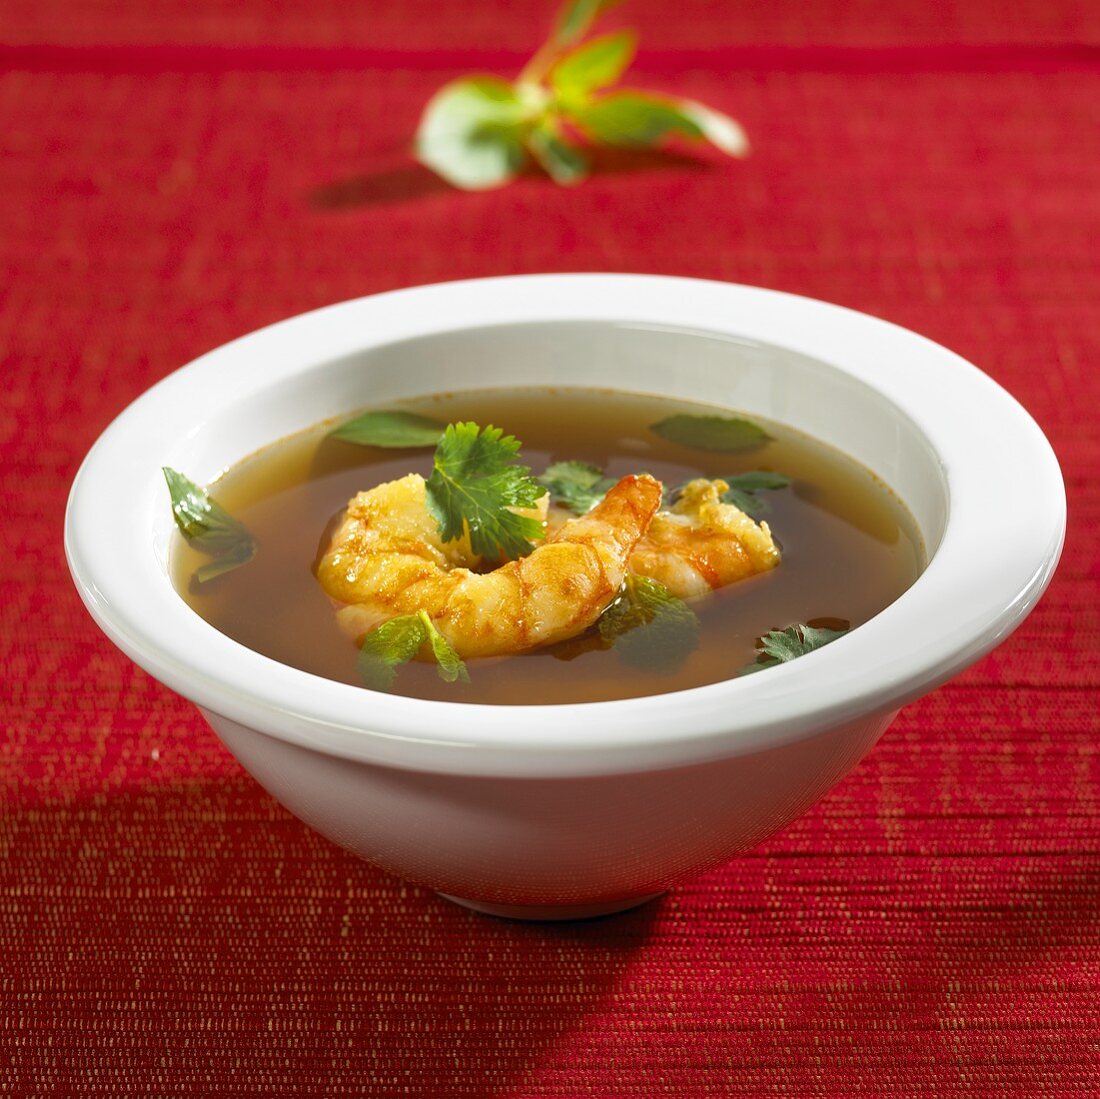 Tom yum soup with prawns (Thailand)